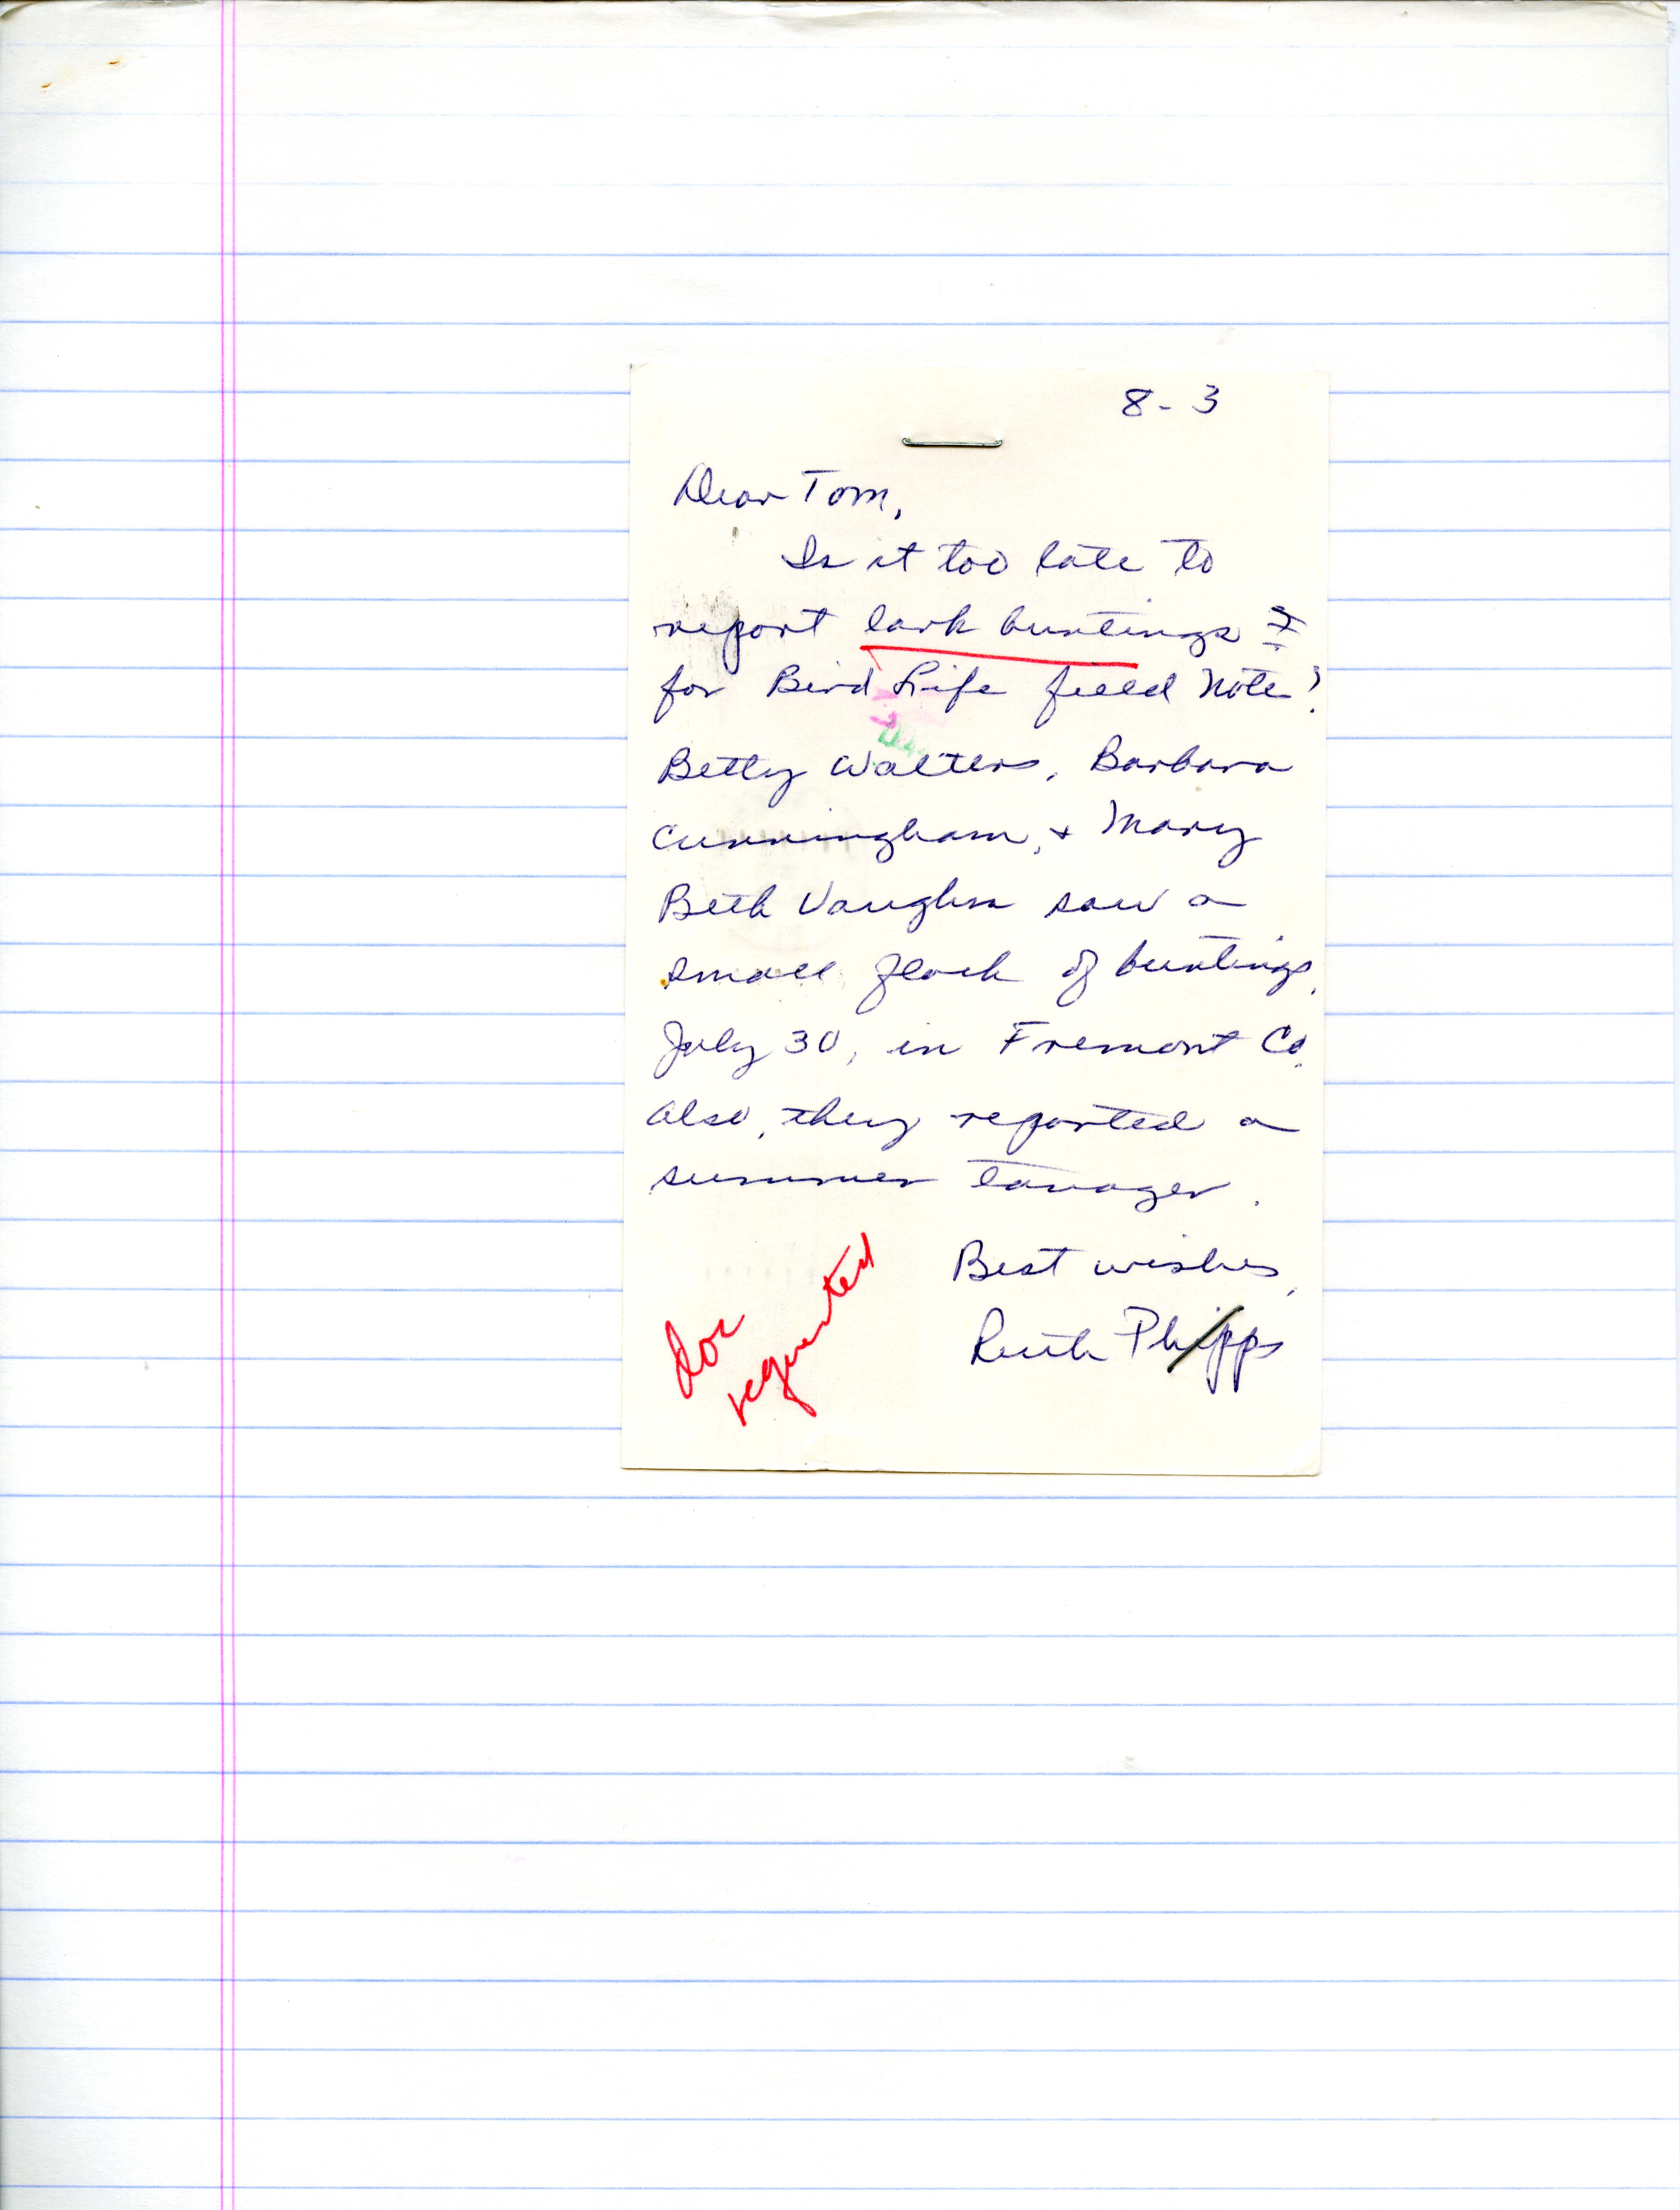 Ruth Phipps letter to Thomas H. Kent regarding bird sightings, August 3, 1980